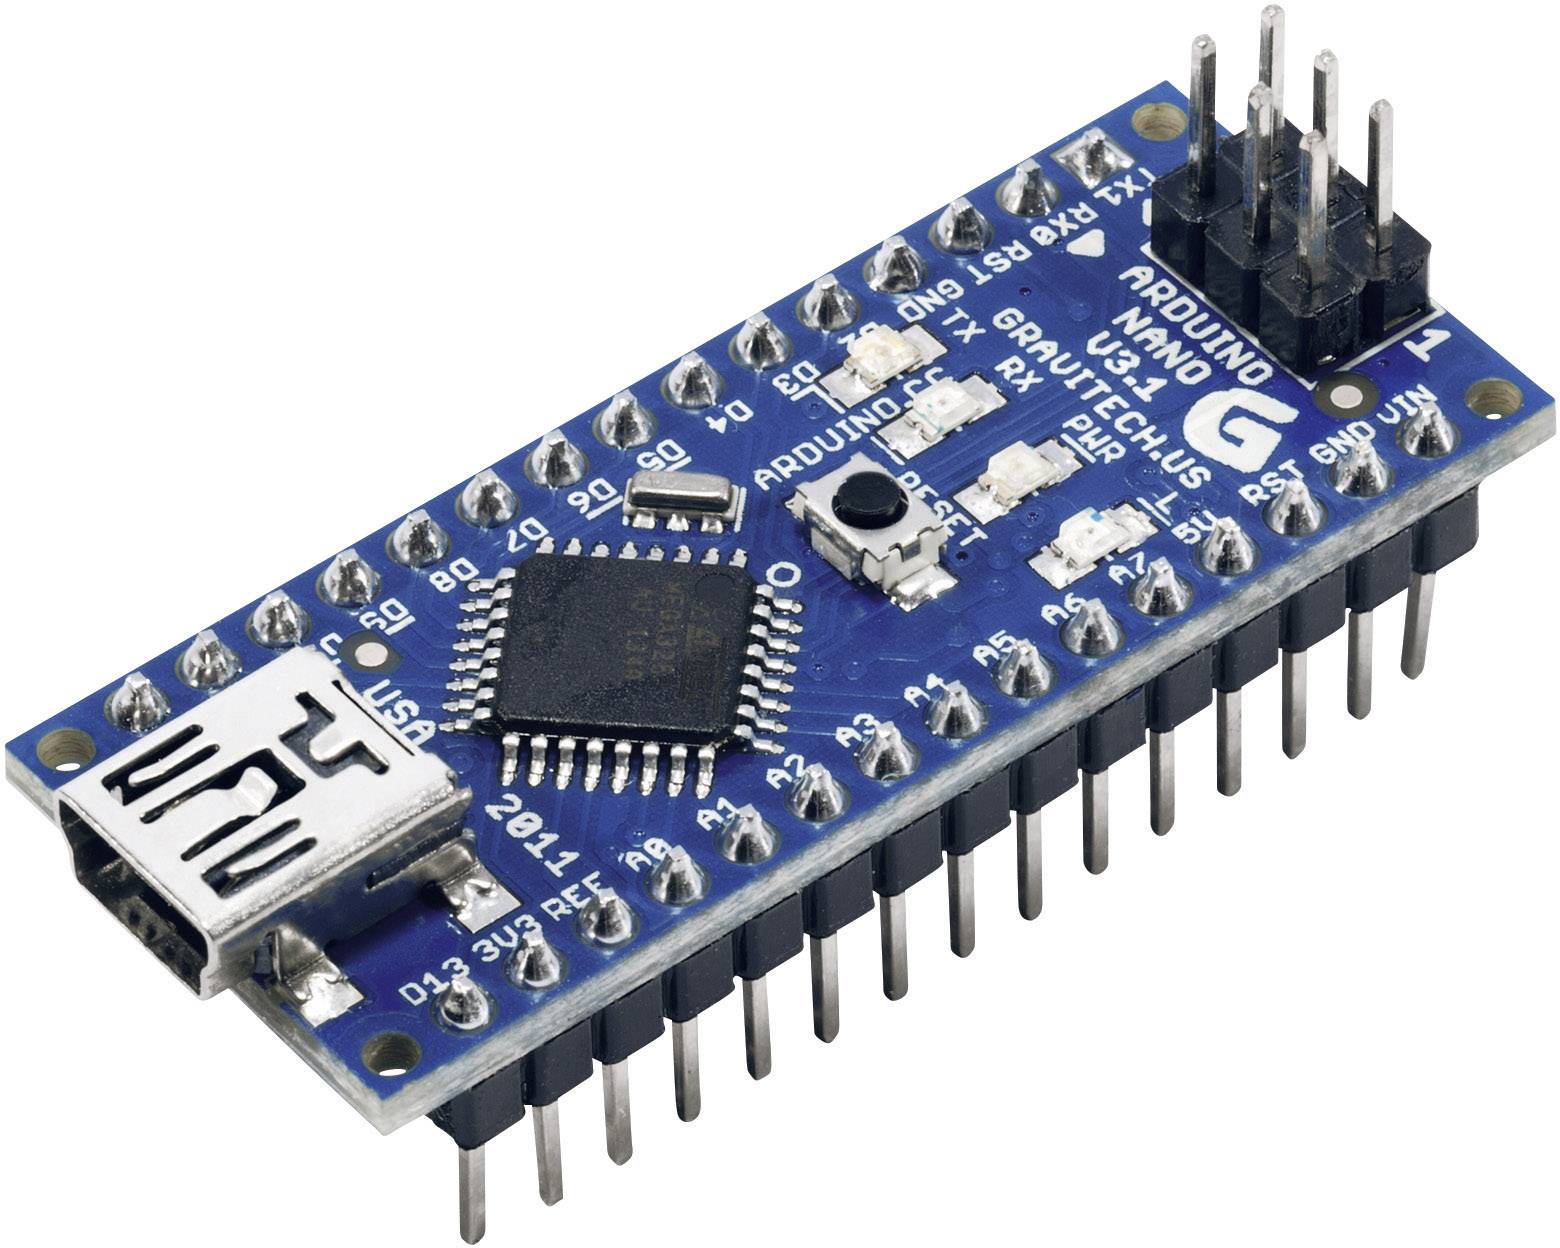 Buy Arduino A000005 Board Nano Core, Nano ATMega328